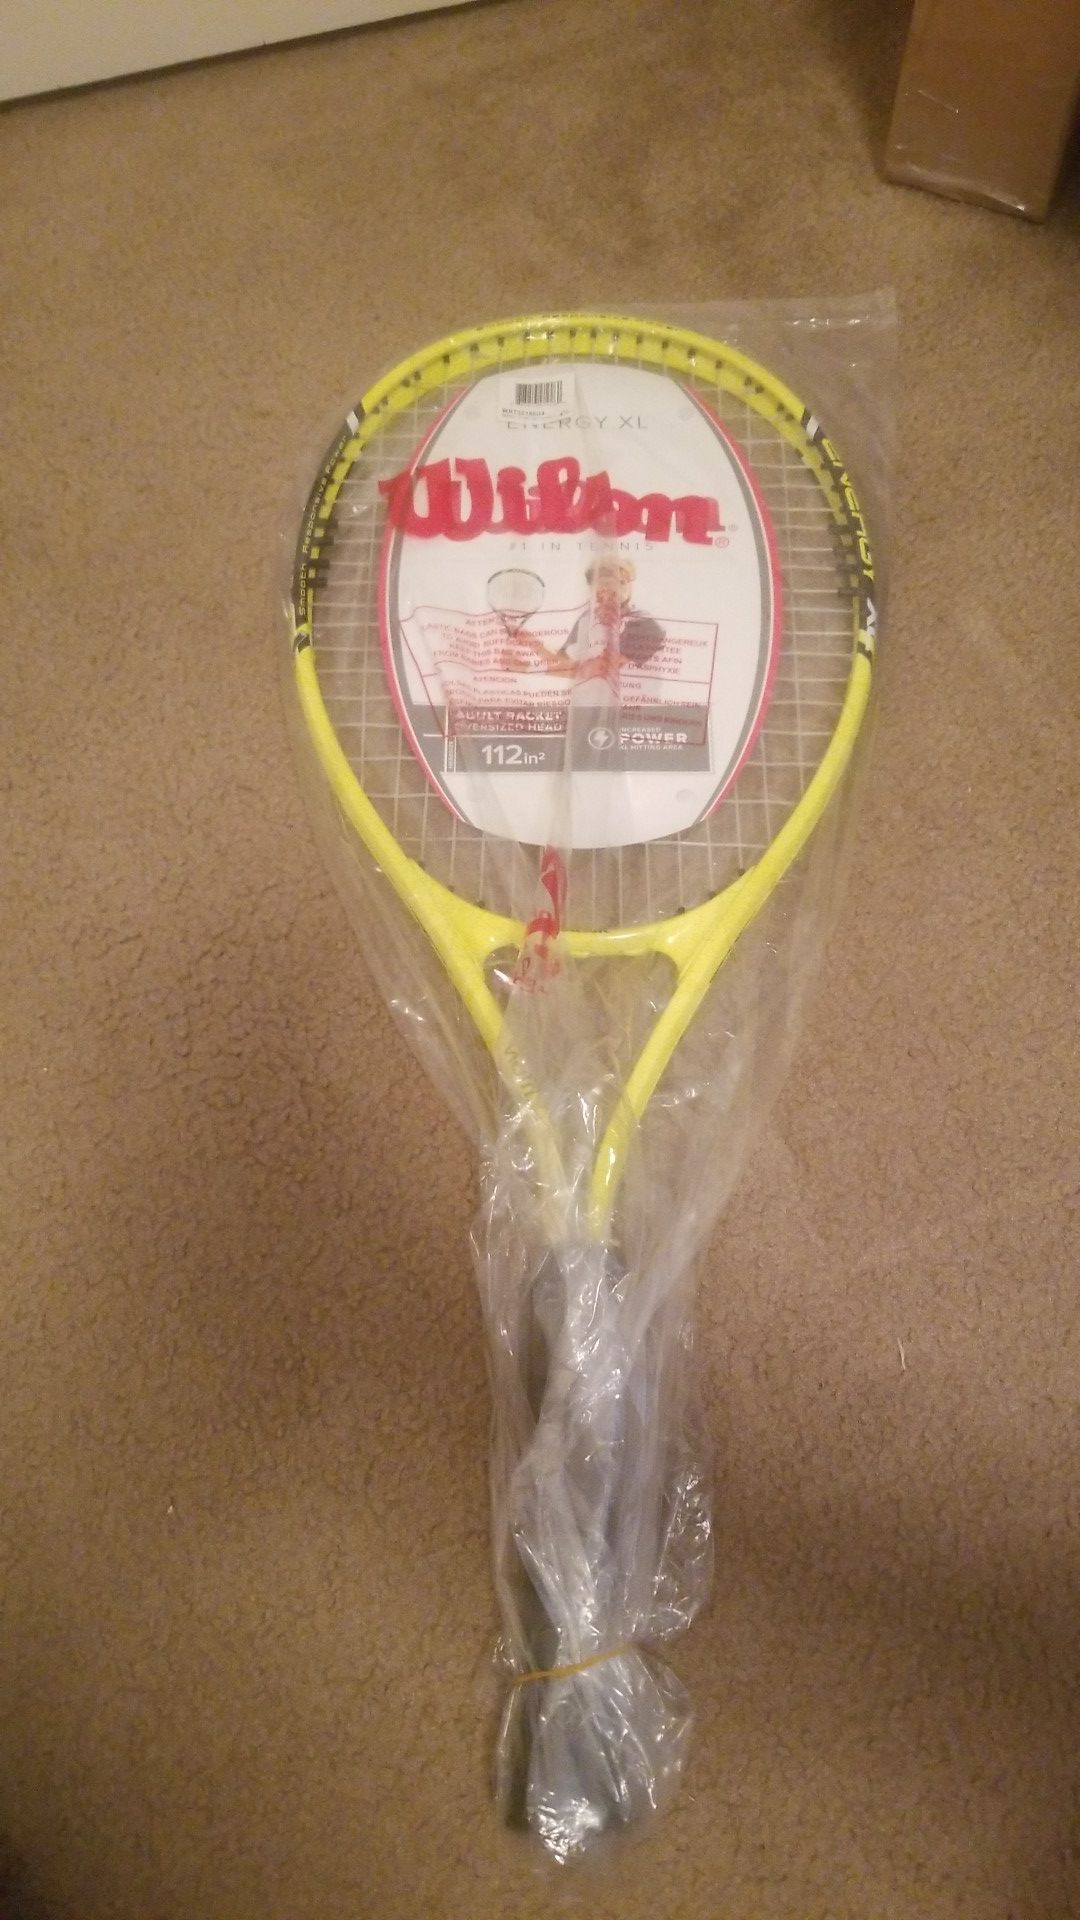 Wilson energy xl adult tennis racket